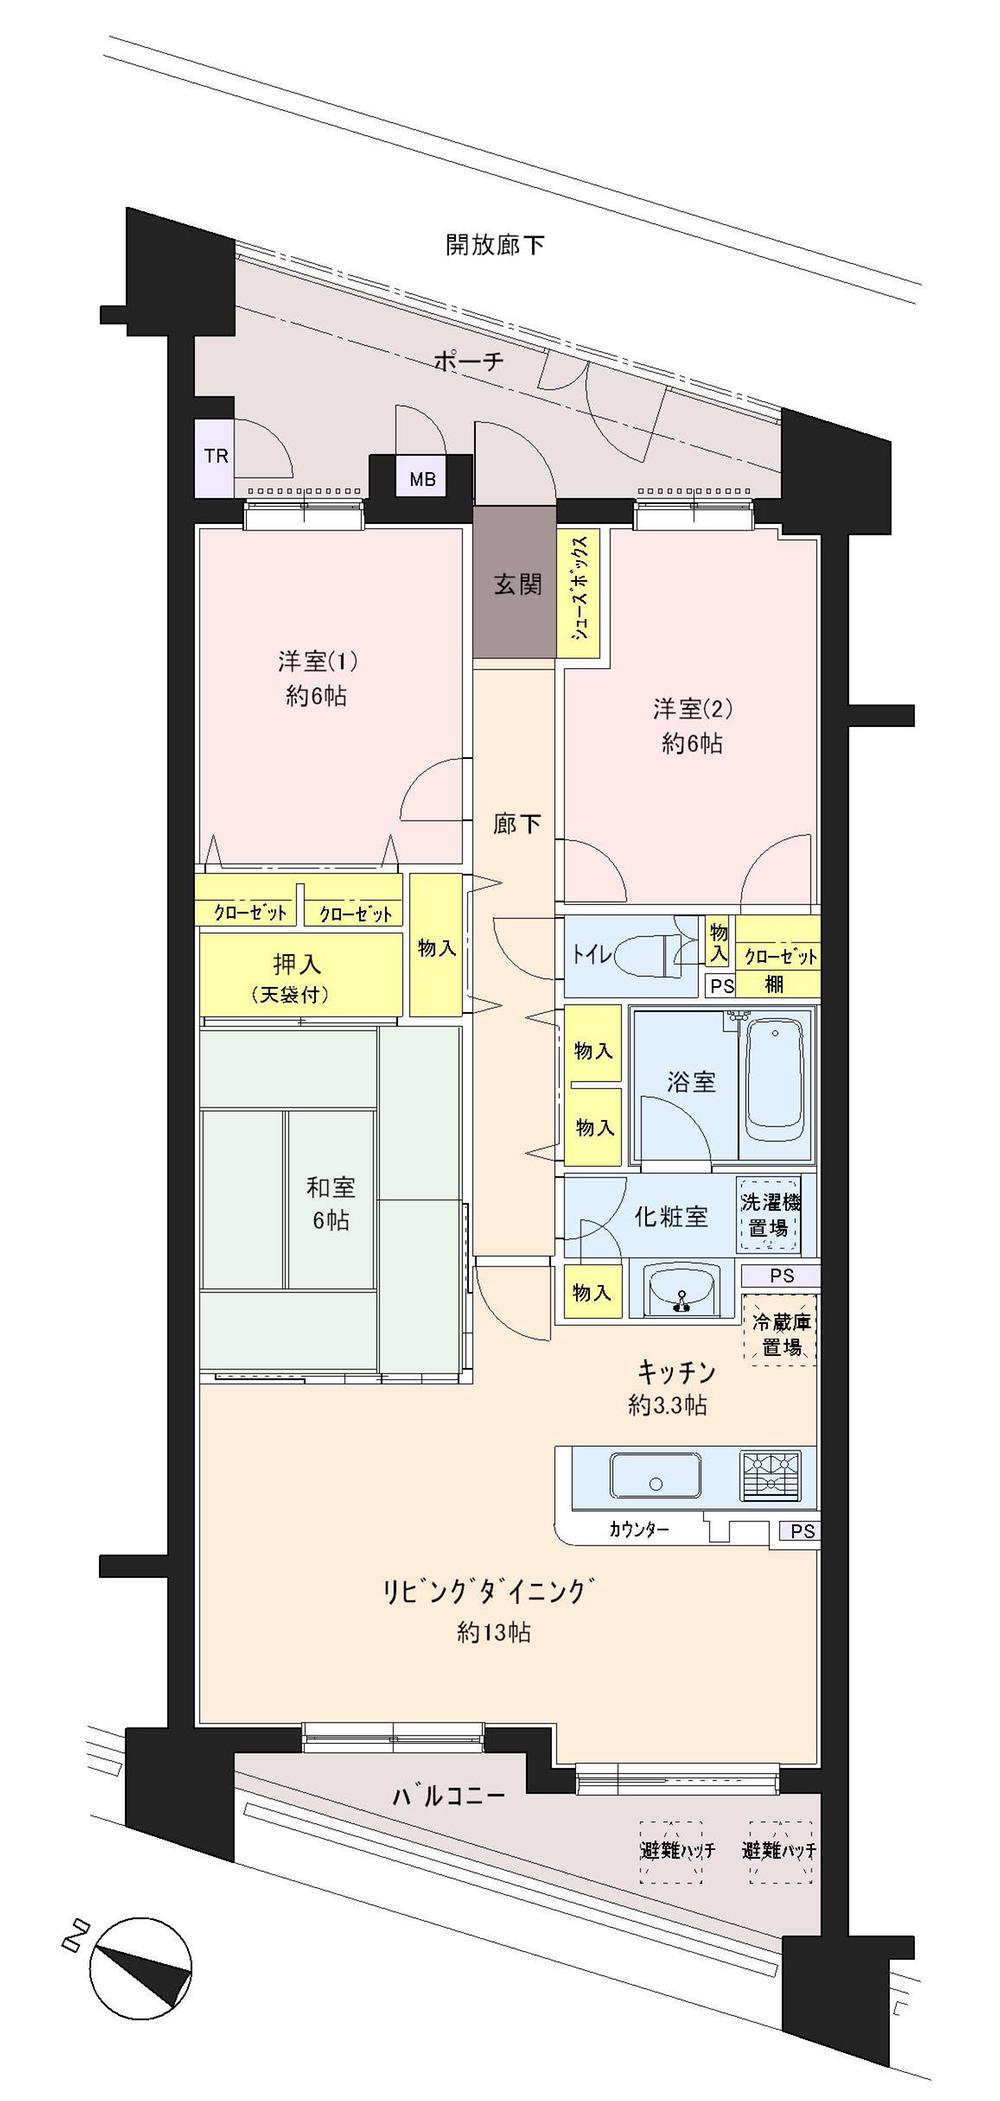 Floor plan. 3LDK, Price 18.6 million yen, Occupied area 78.78 sq m , Balcony area 7.78 sq m